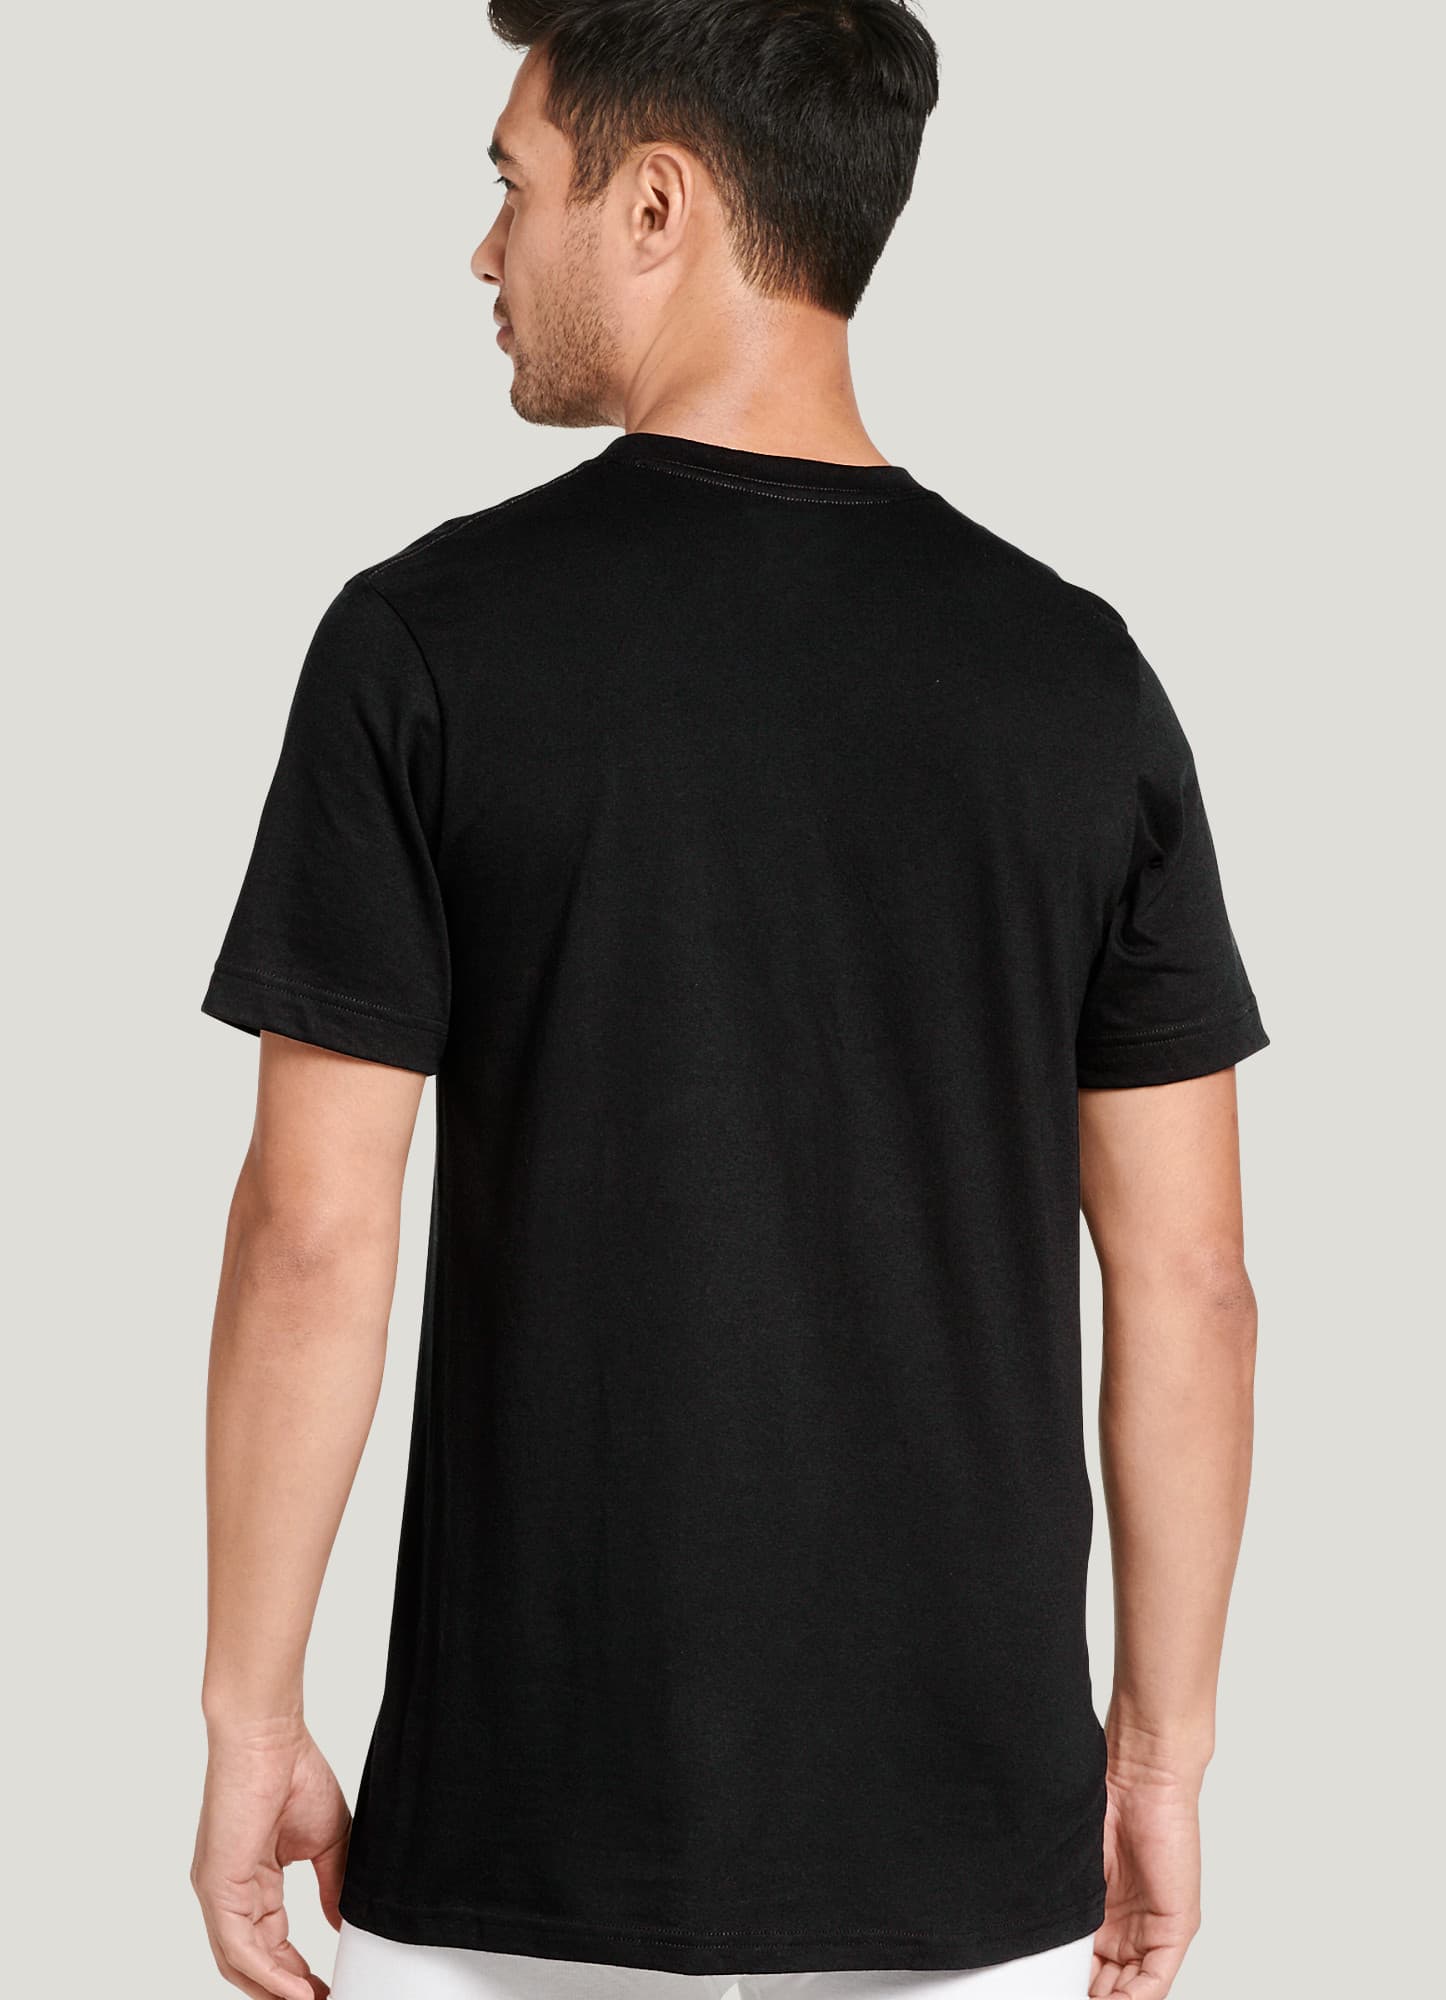 Jockey® Made in America 100% Cotton Crew Neck T-Shirt - 2 Pack